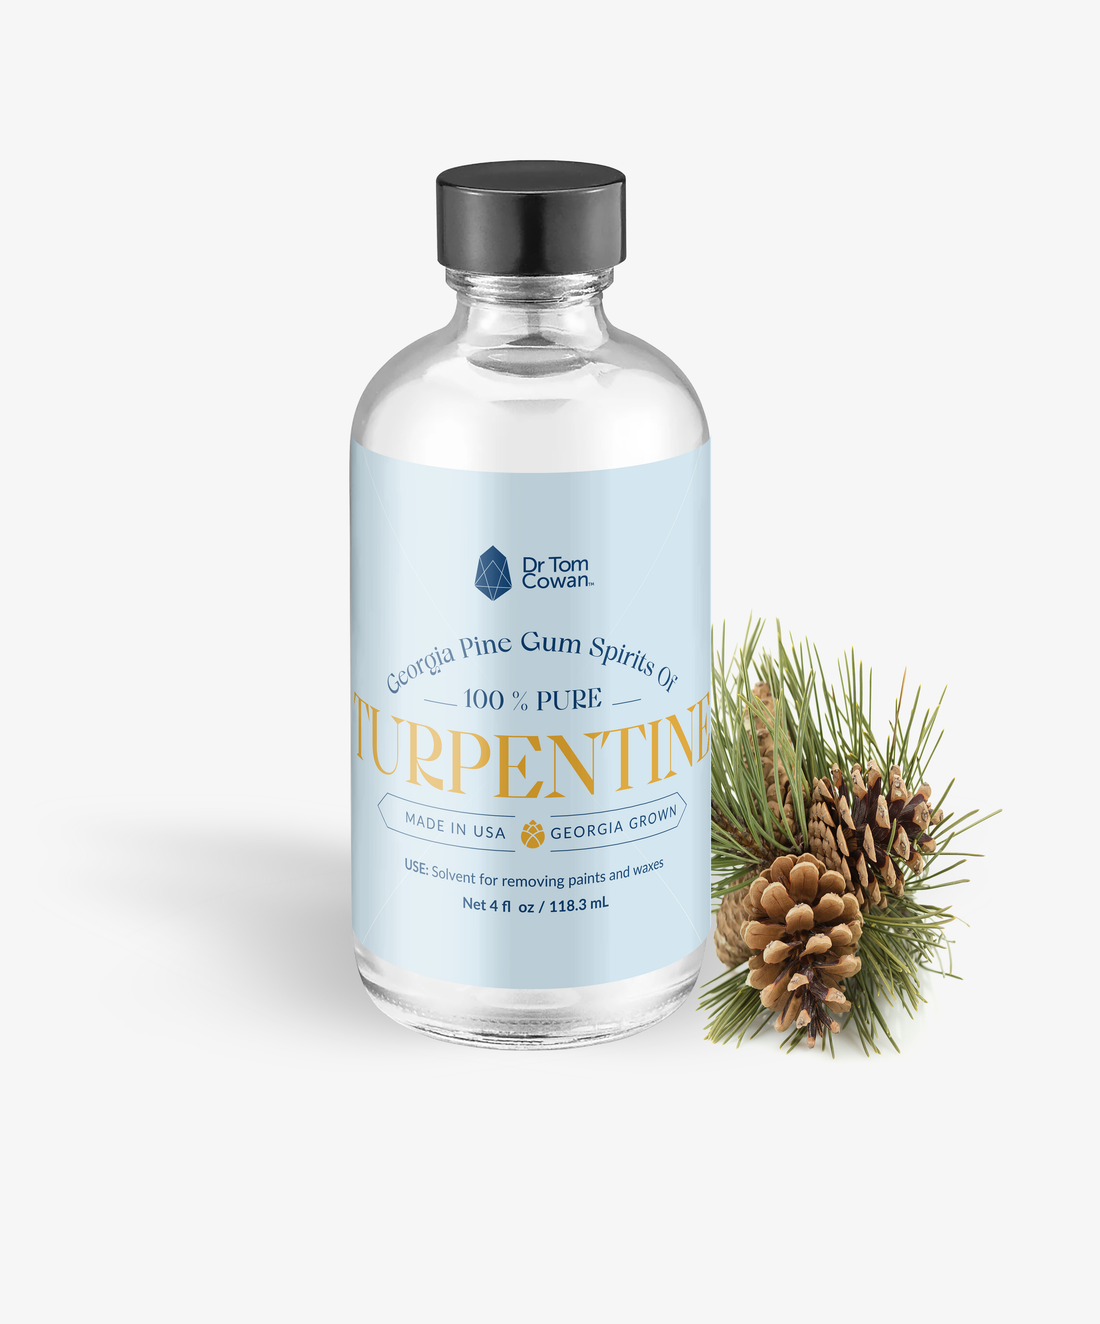 TURPENTINE 1000 ML 100% Pure Gum Spirits of Turpentine Pine ( 33.81 fl oz )  $25.99 - PicClick